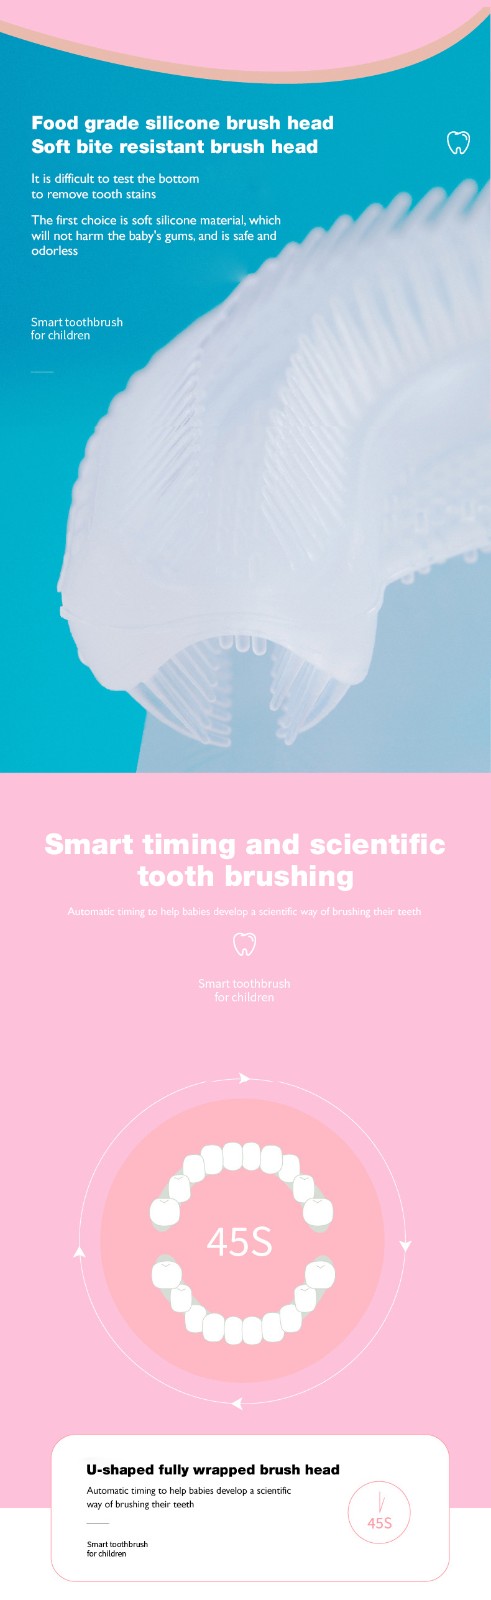 GlorySmile best smart toothbrush company for teeth-2